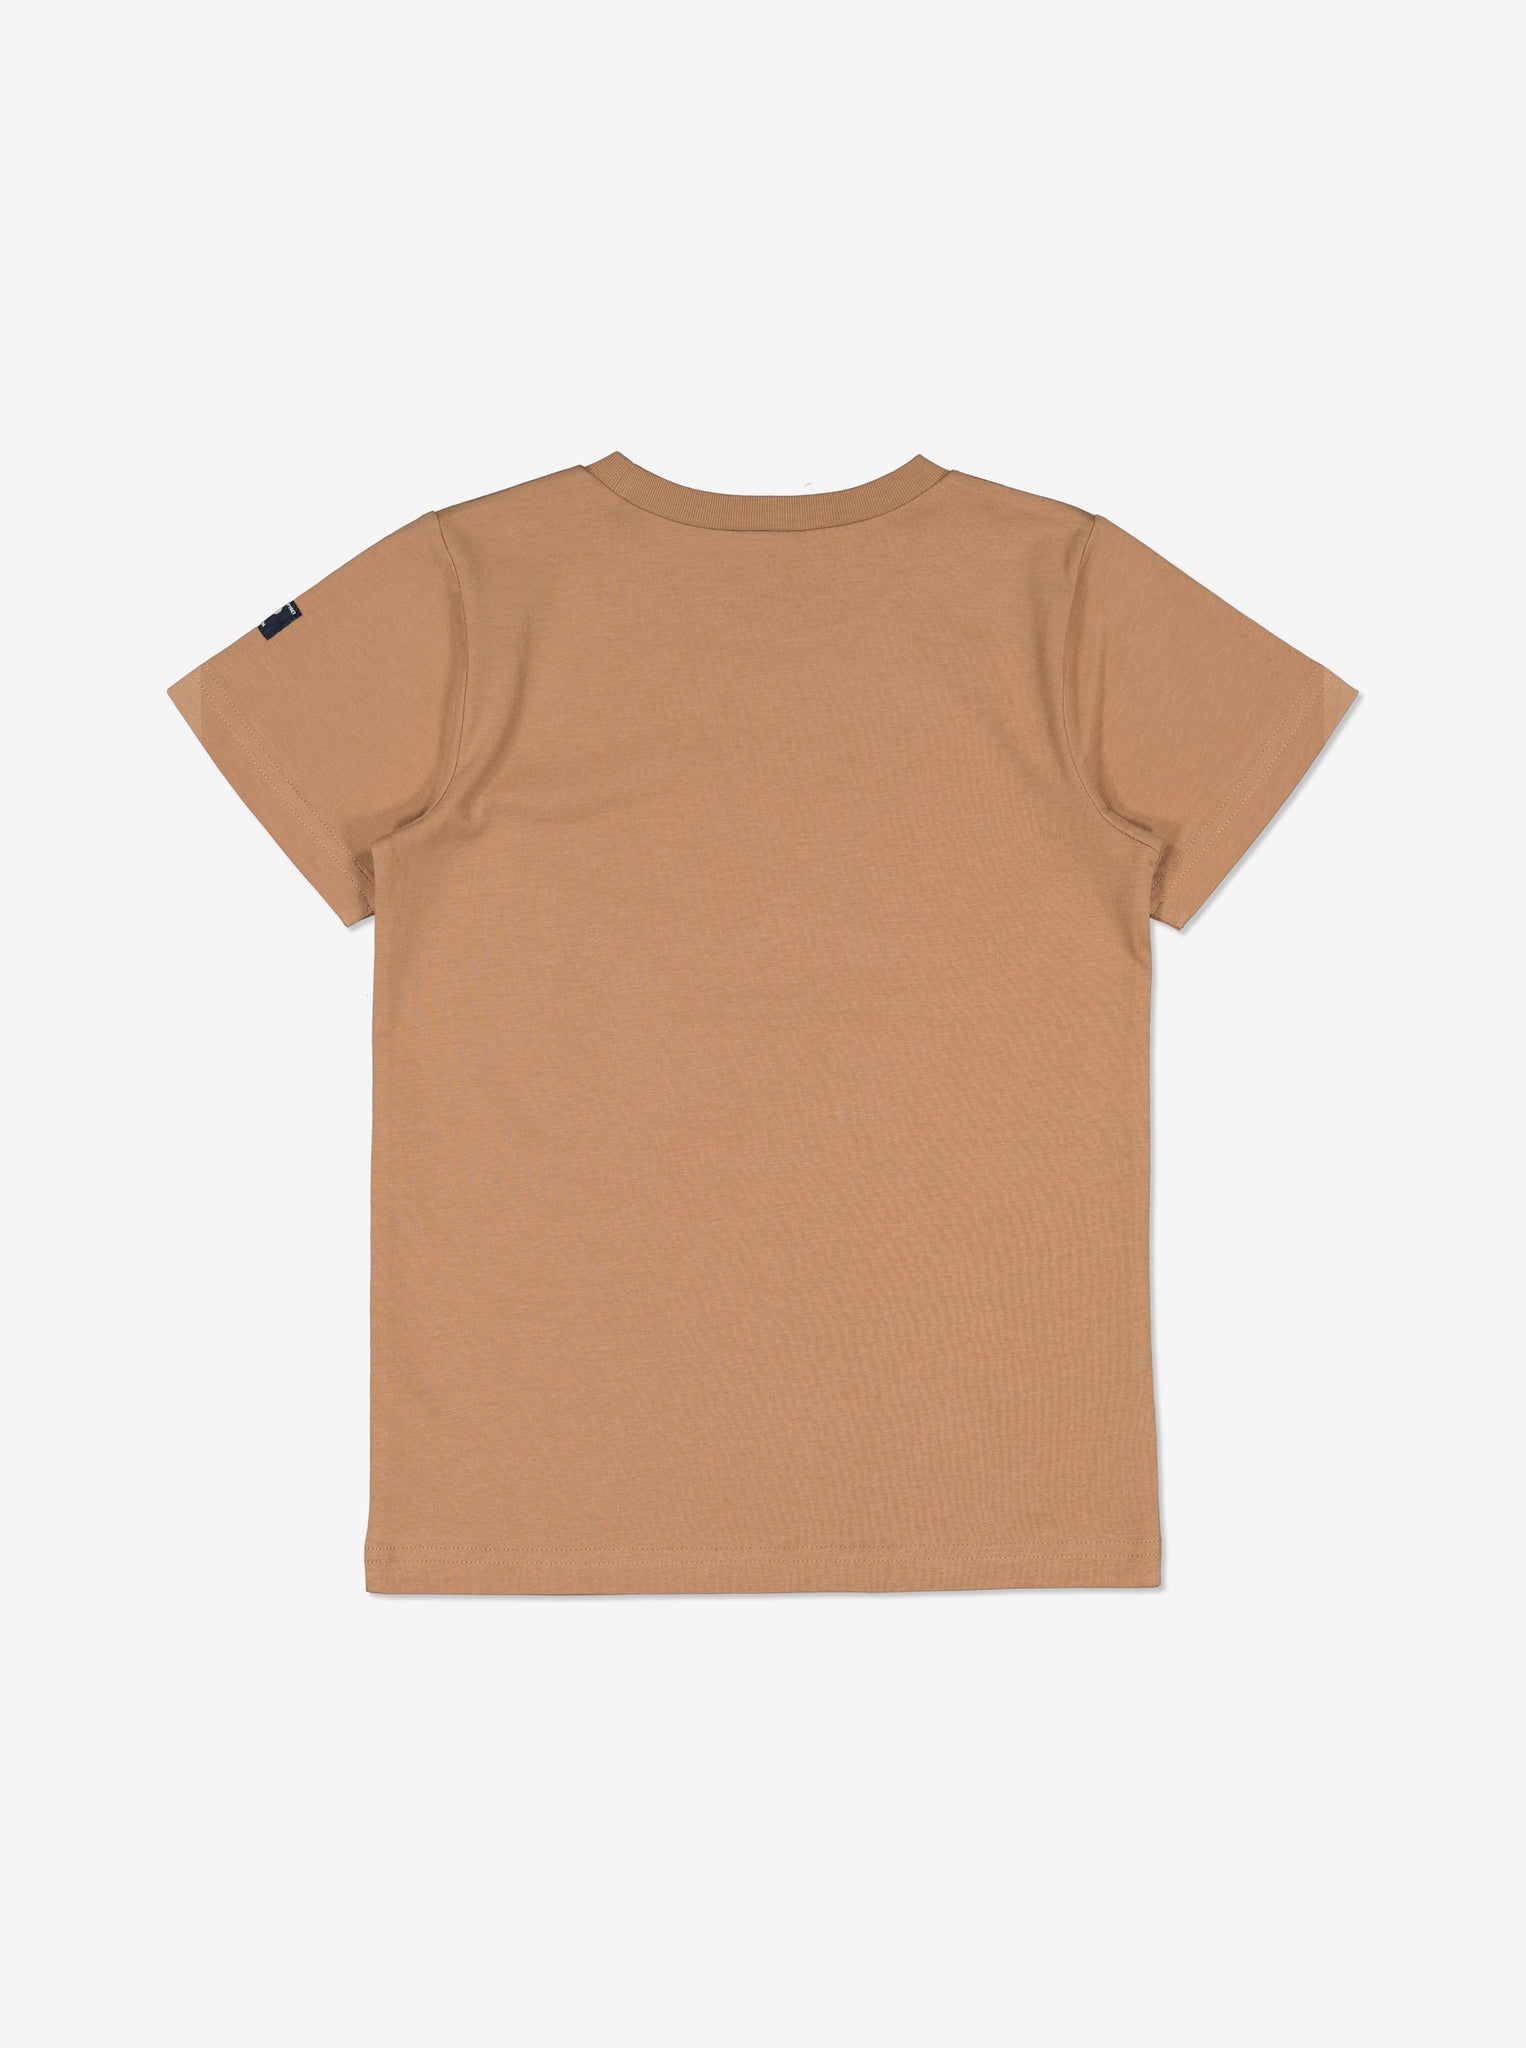  Organic Brown Animal Print Kids T-Shirt from Polarn O. Pyret Kidswear. Made with 100% organic cotton.